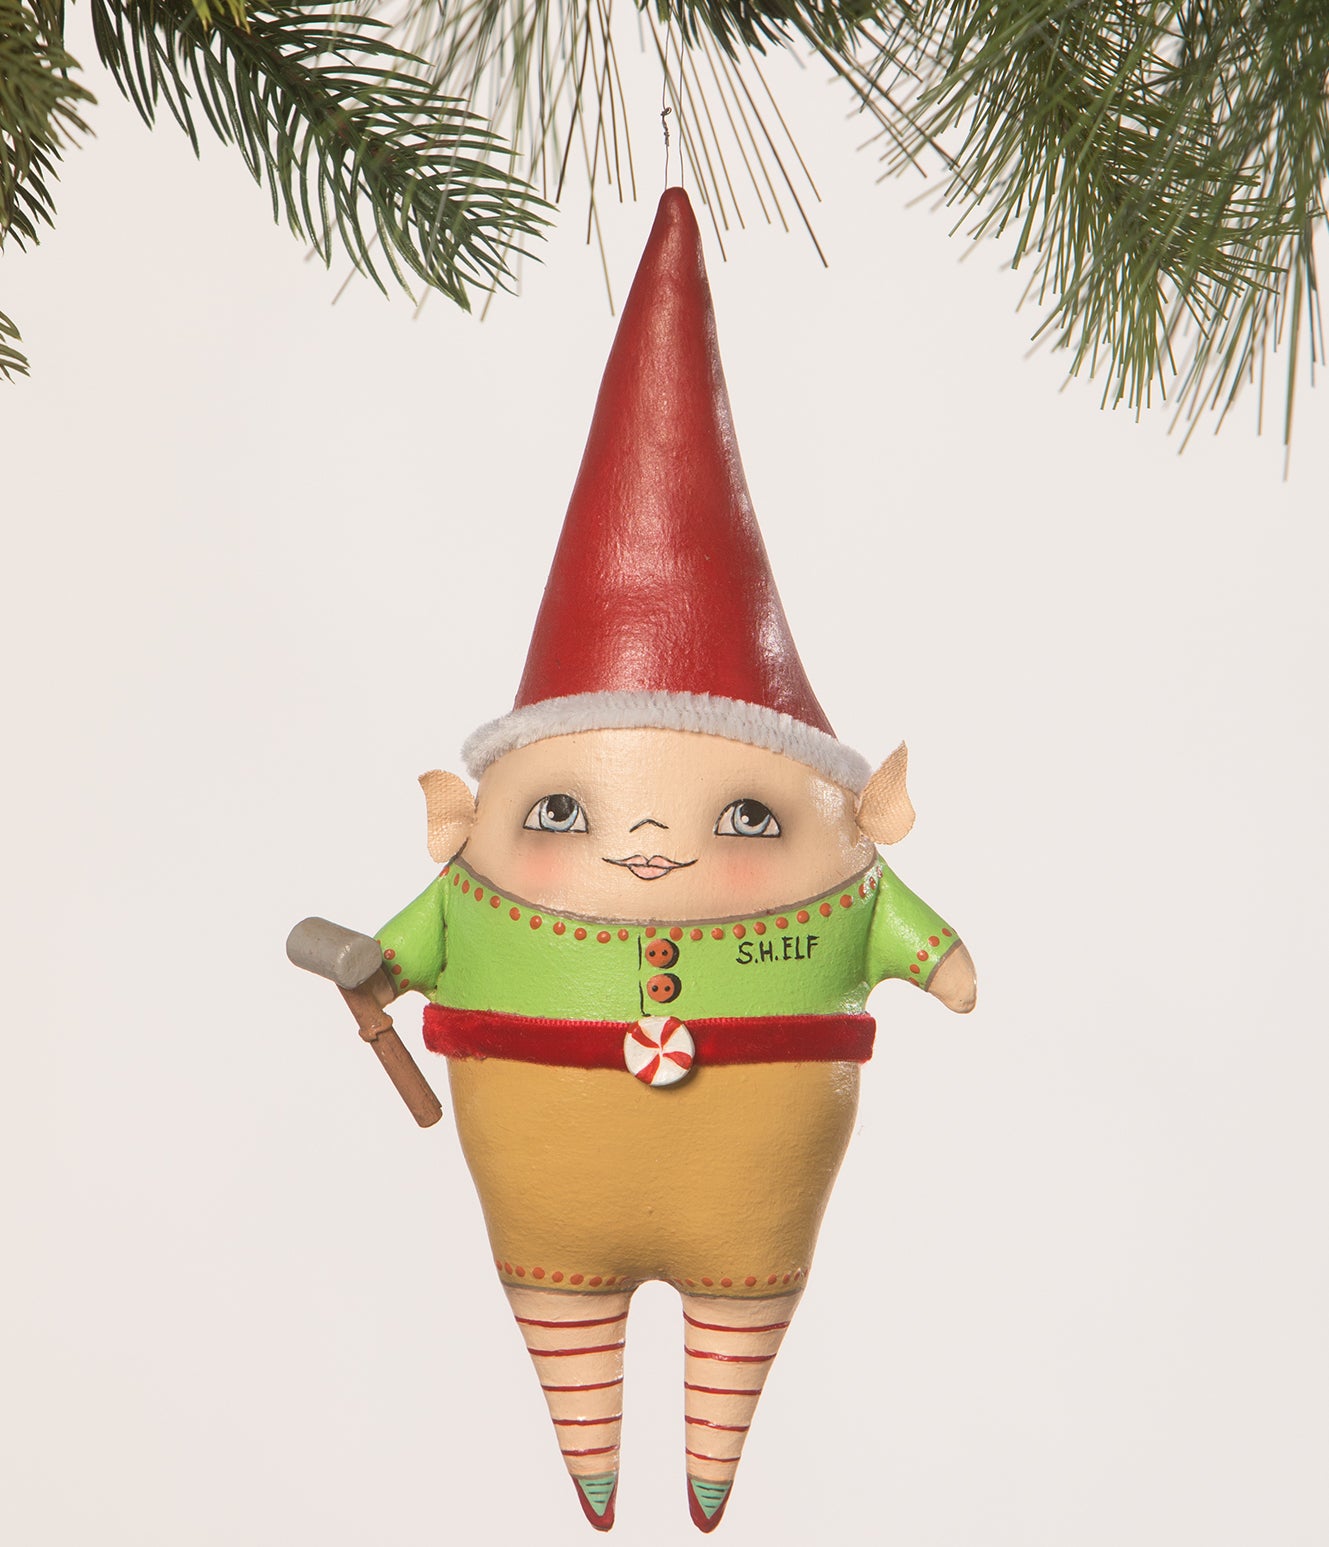 Santa's Helper Elf Ornament by Robin Seeber